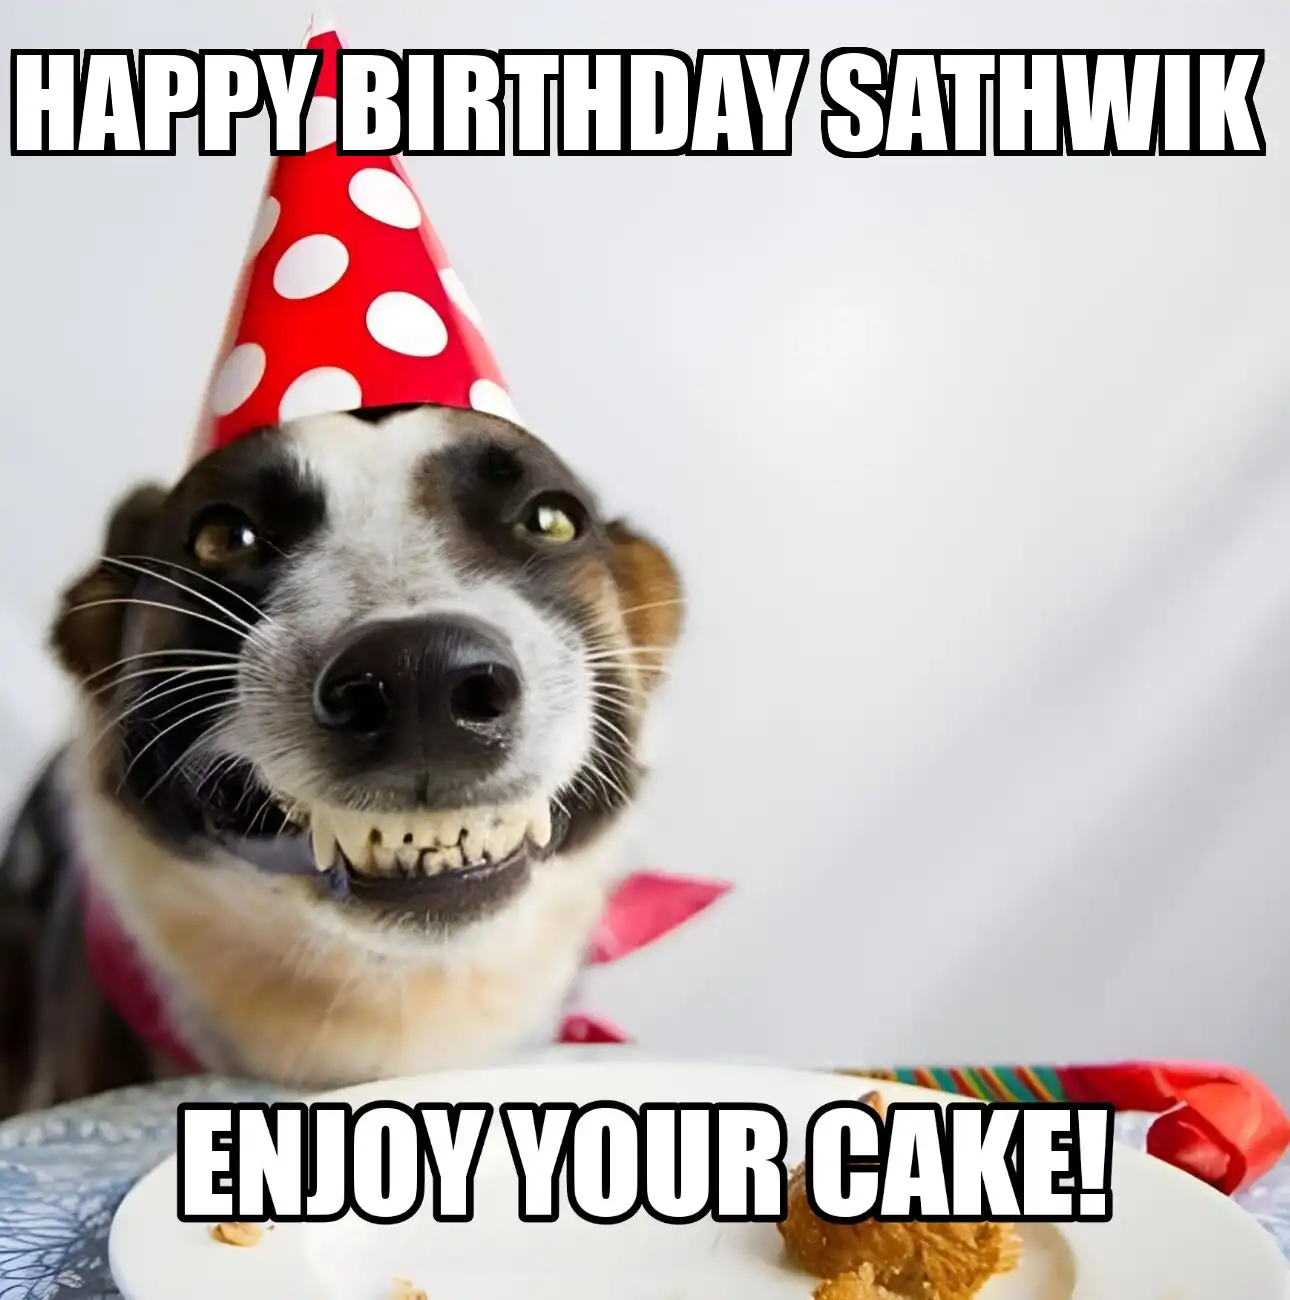 Happy Birthday Sathwik Enjoy Your Cake Dog Meme